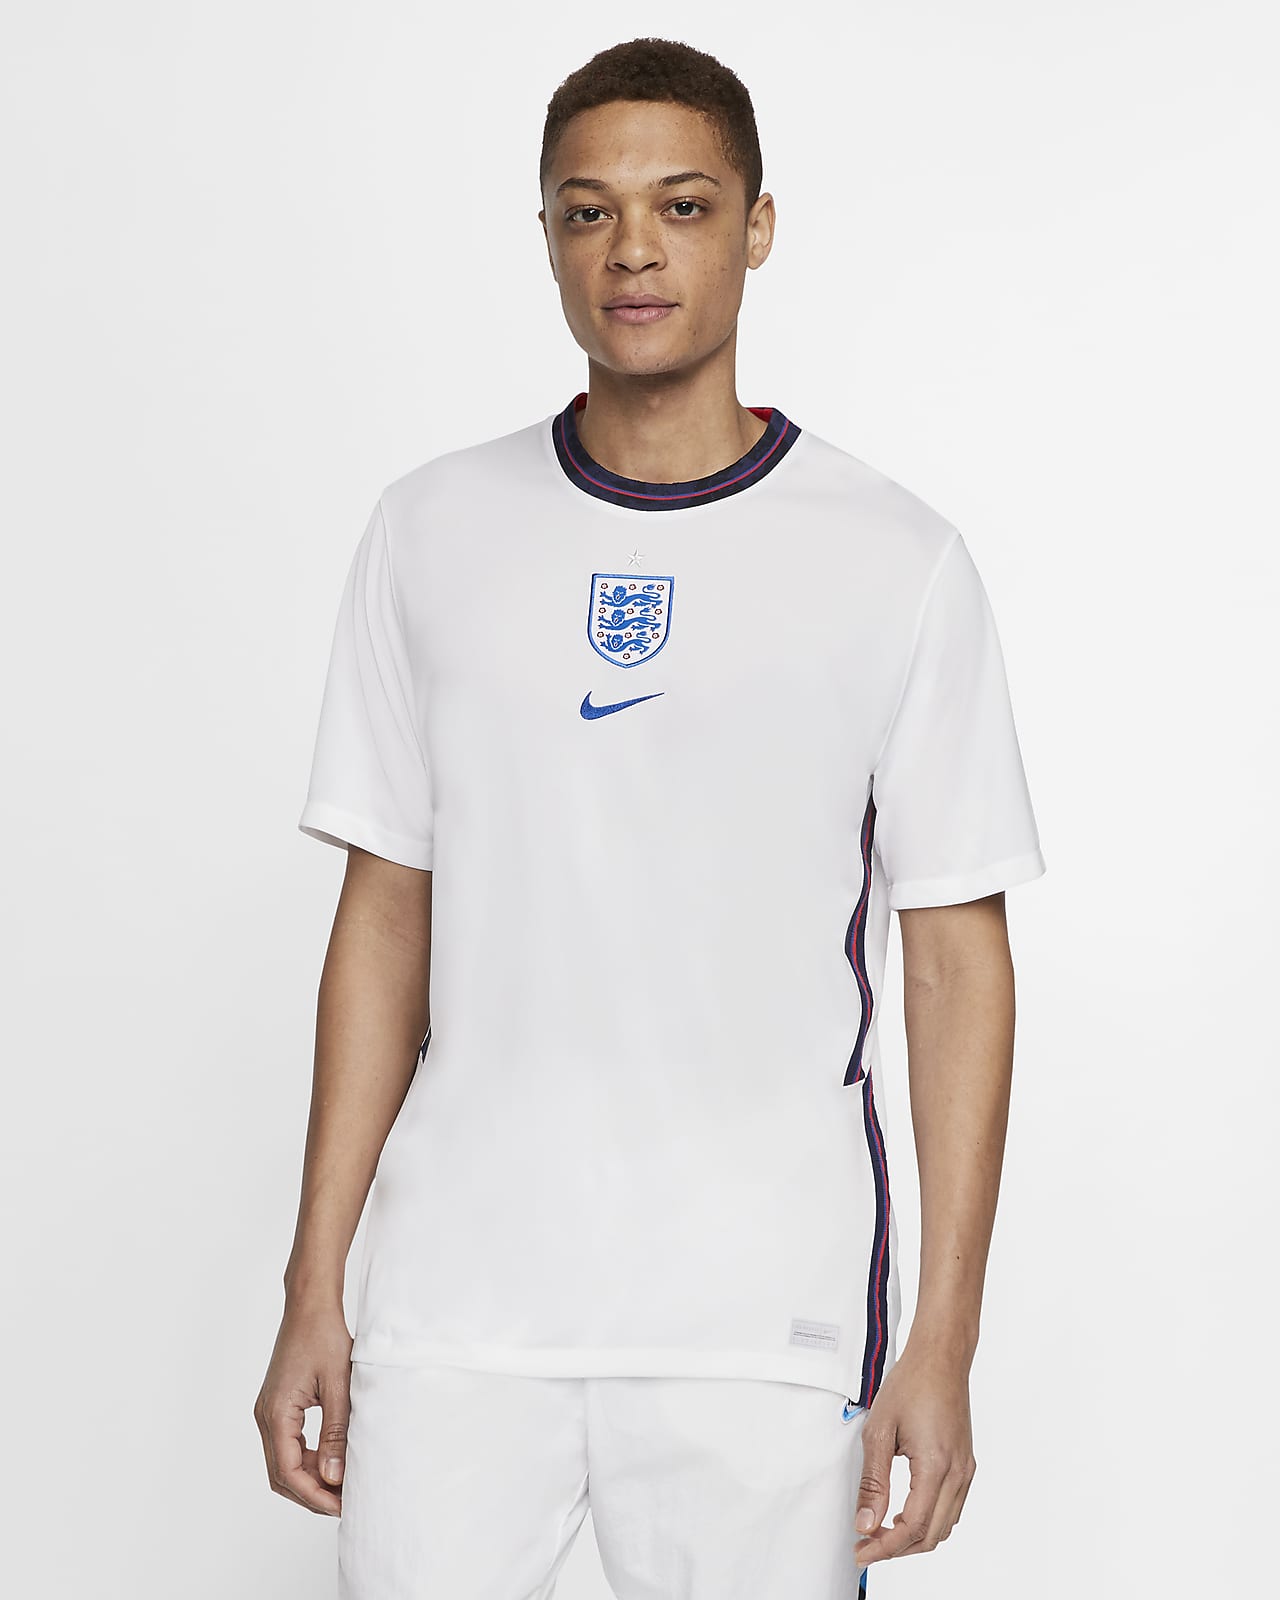 Nike公式 イングランド スタジアム ホーム メンズ サッカーユニフォーム オンラインストア 通販サイト